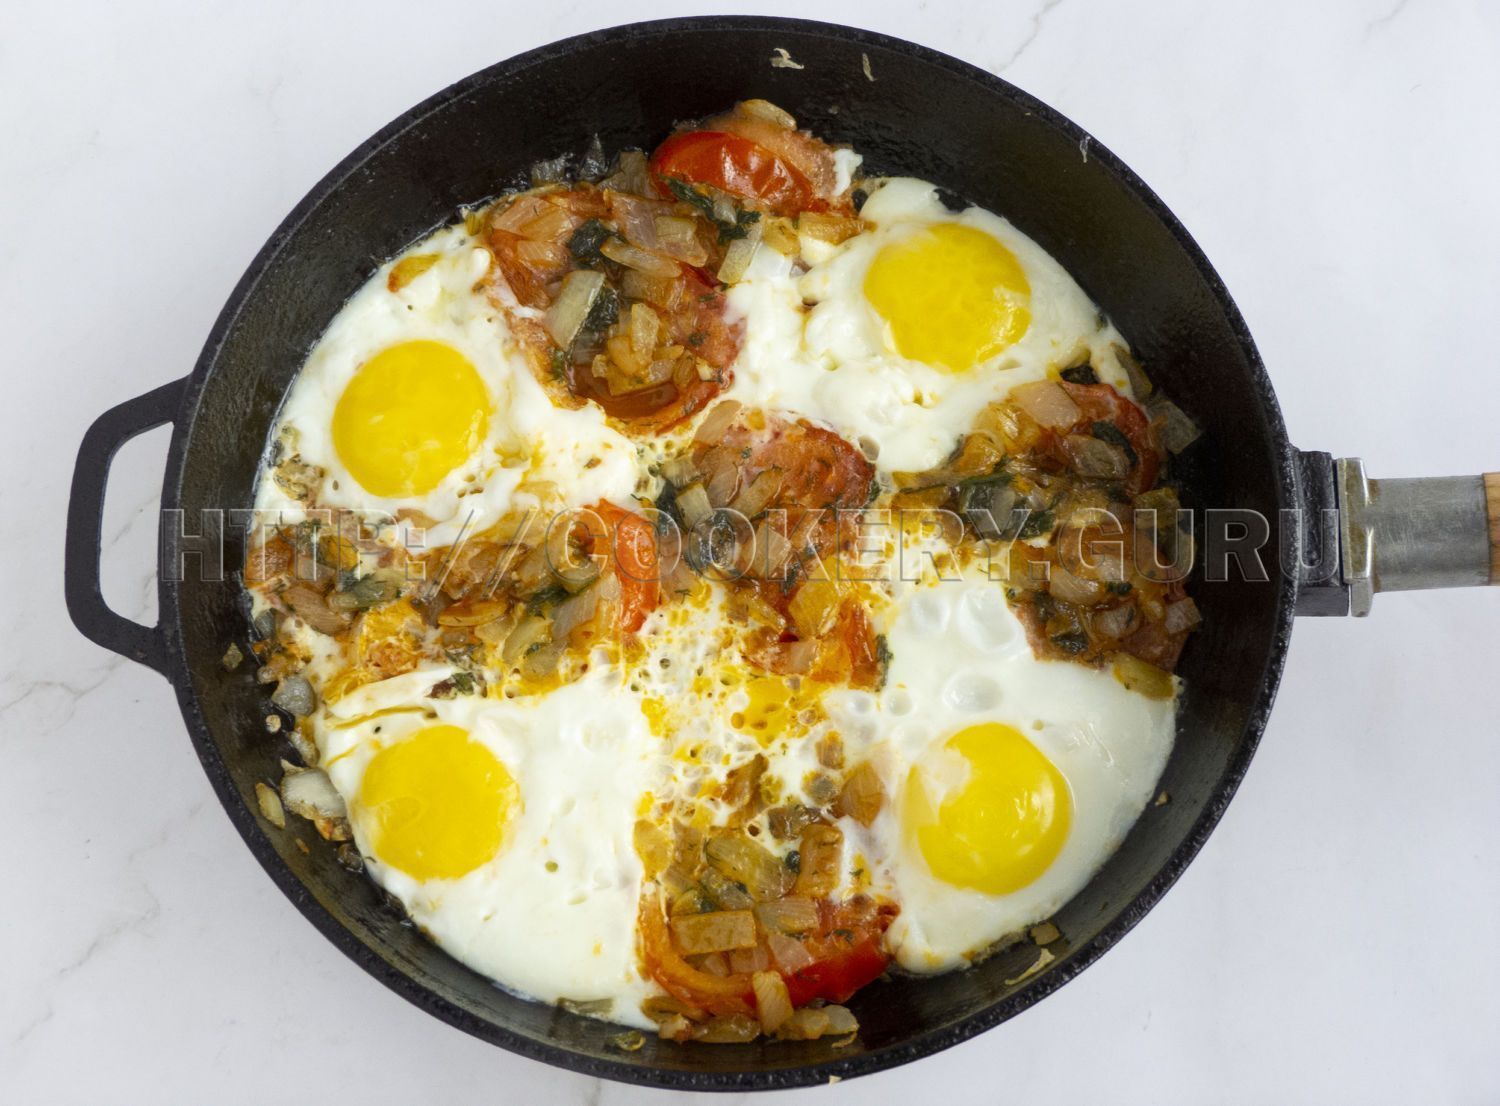 яичница с помидорами, яичница с помидорами на сковороде, яичница с помидорами и луком, вкусная яичница с помидорами, яичница с помидорами фото, фото яичницы с помидорами на сковороде